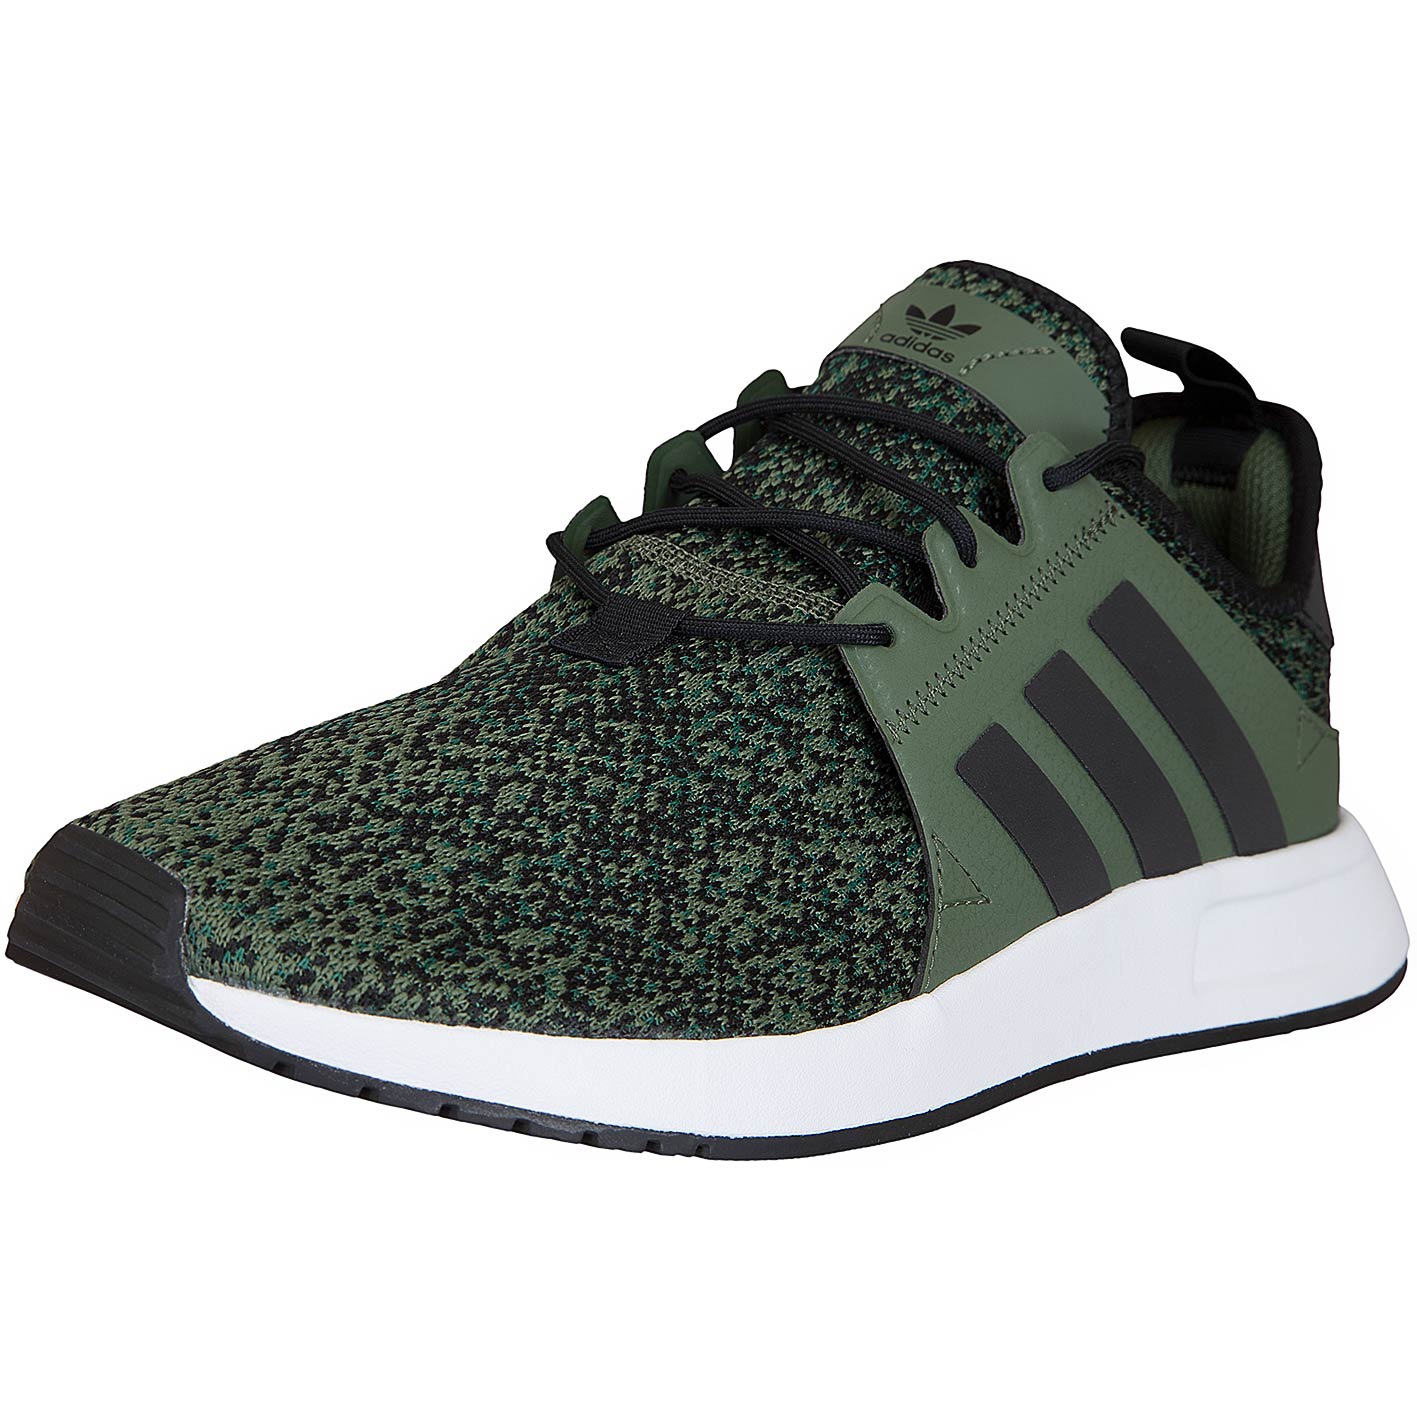 ☆ Adidas Originals Sneaker X PLR grün/schwarz - hier bestellen!